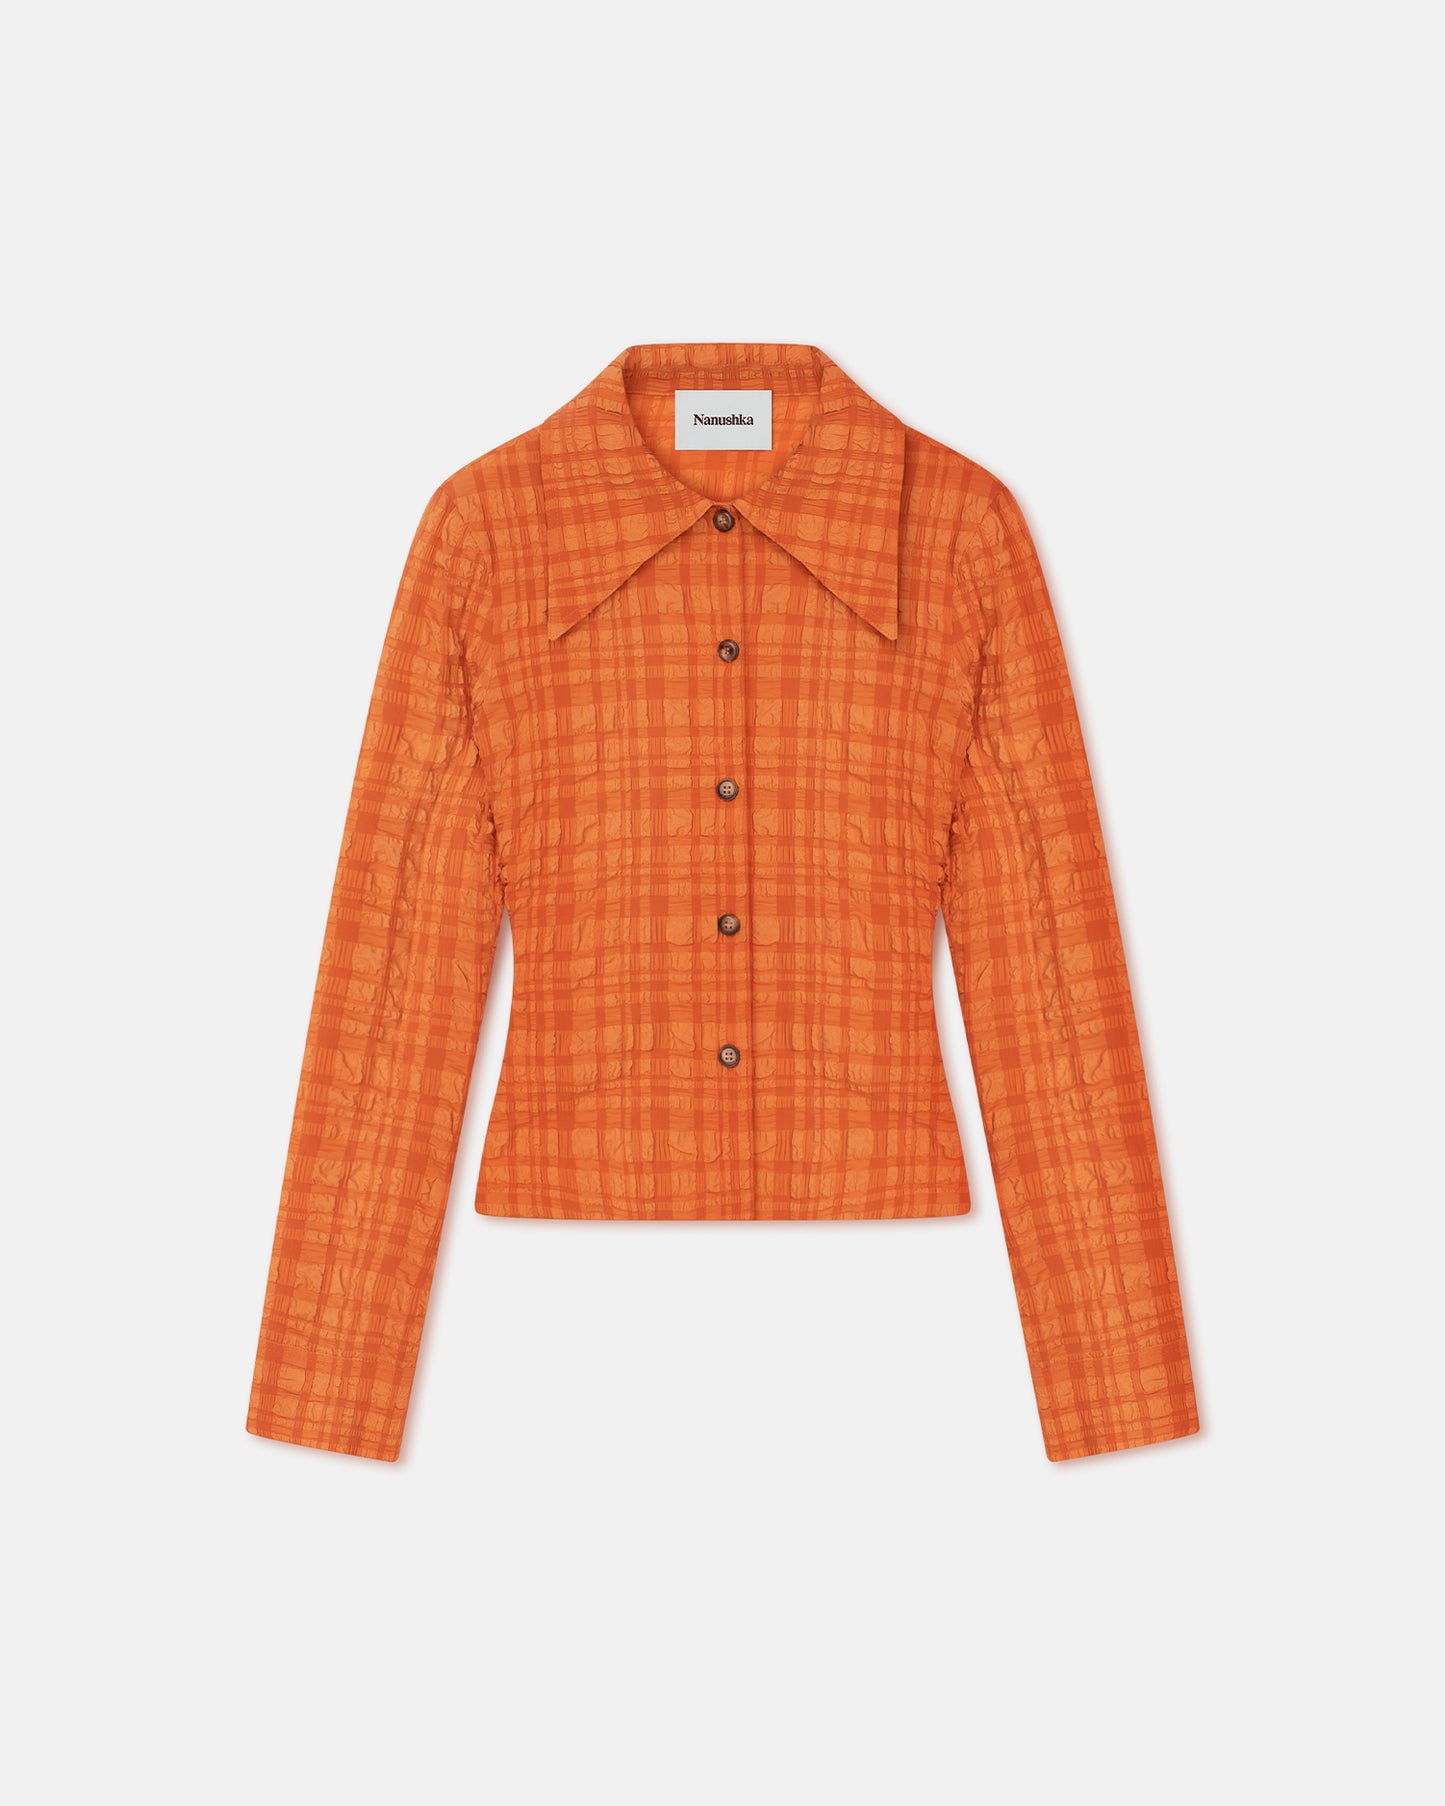 Lotte - Checked Seersucker Shirt - Sunset Orange